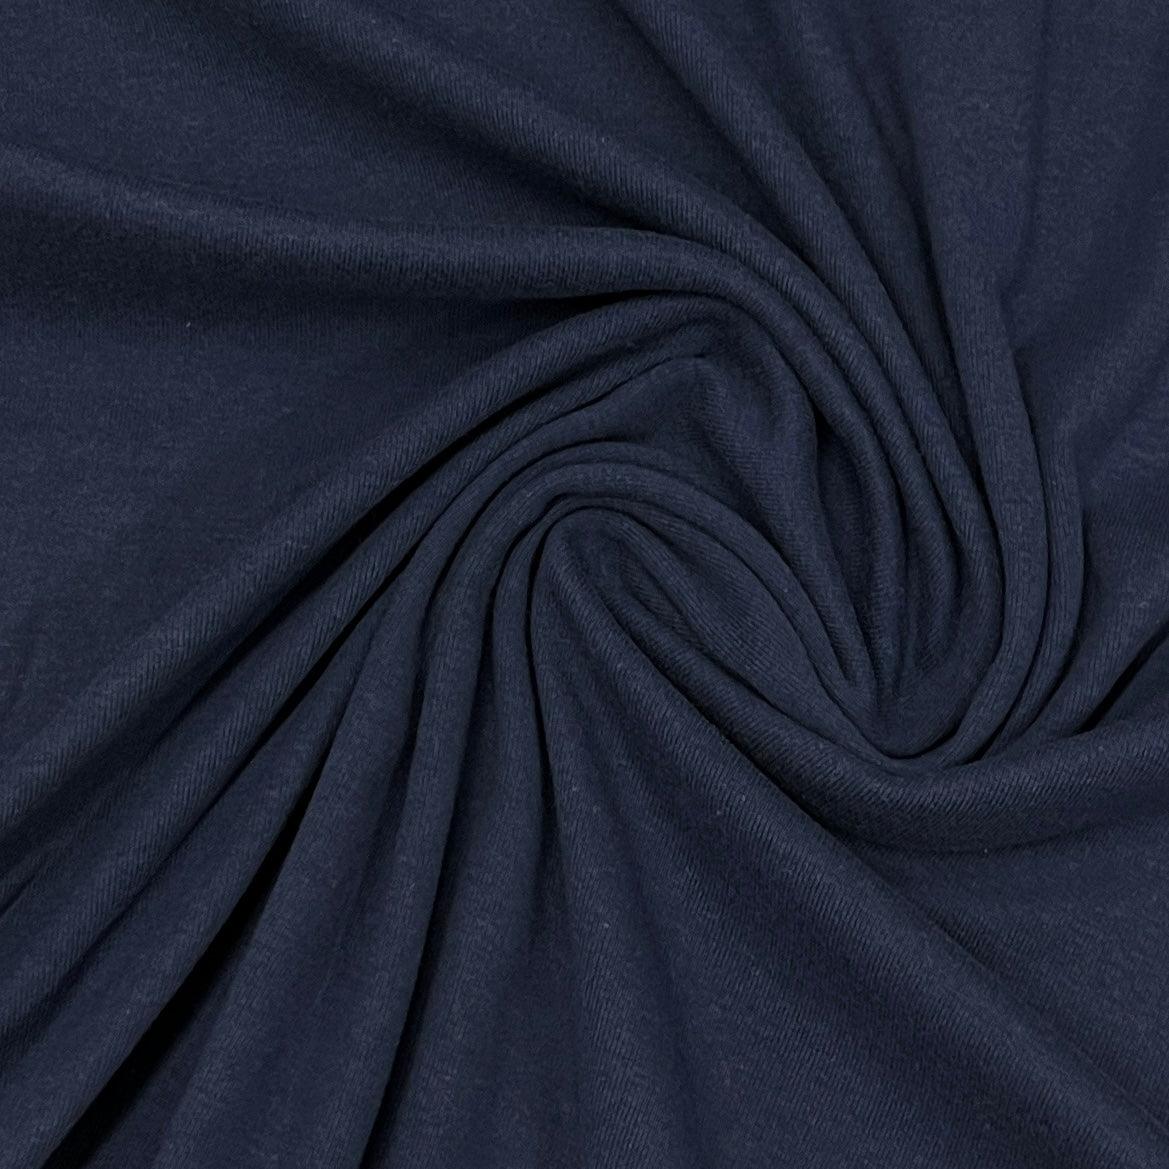 Marine Organic Cotton Medium Rib Knit Fabric - Grown in the USA - Nature's Fabrics